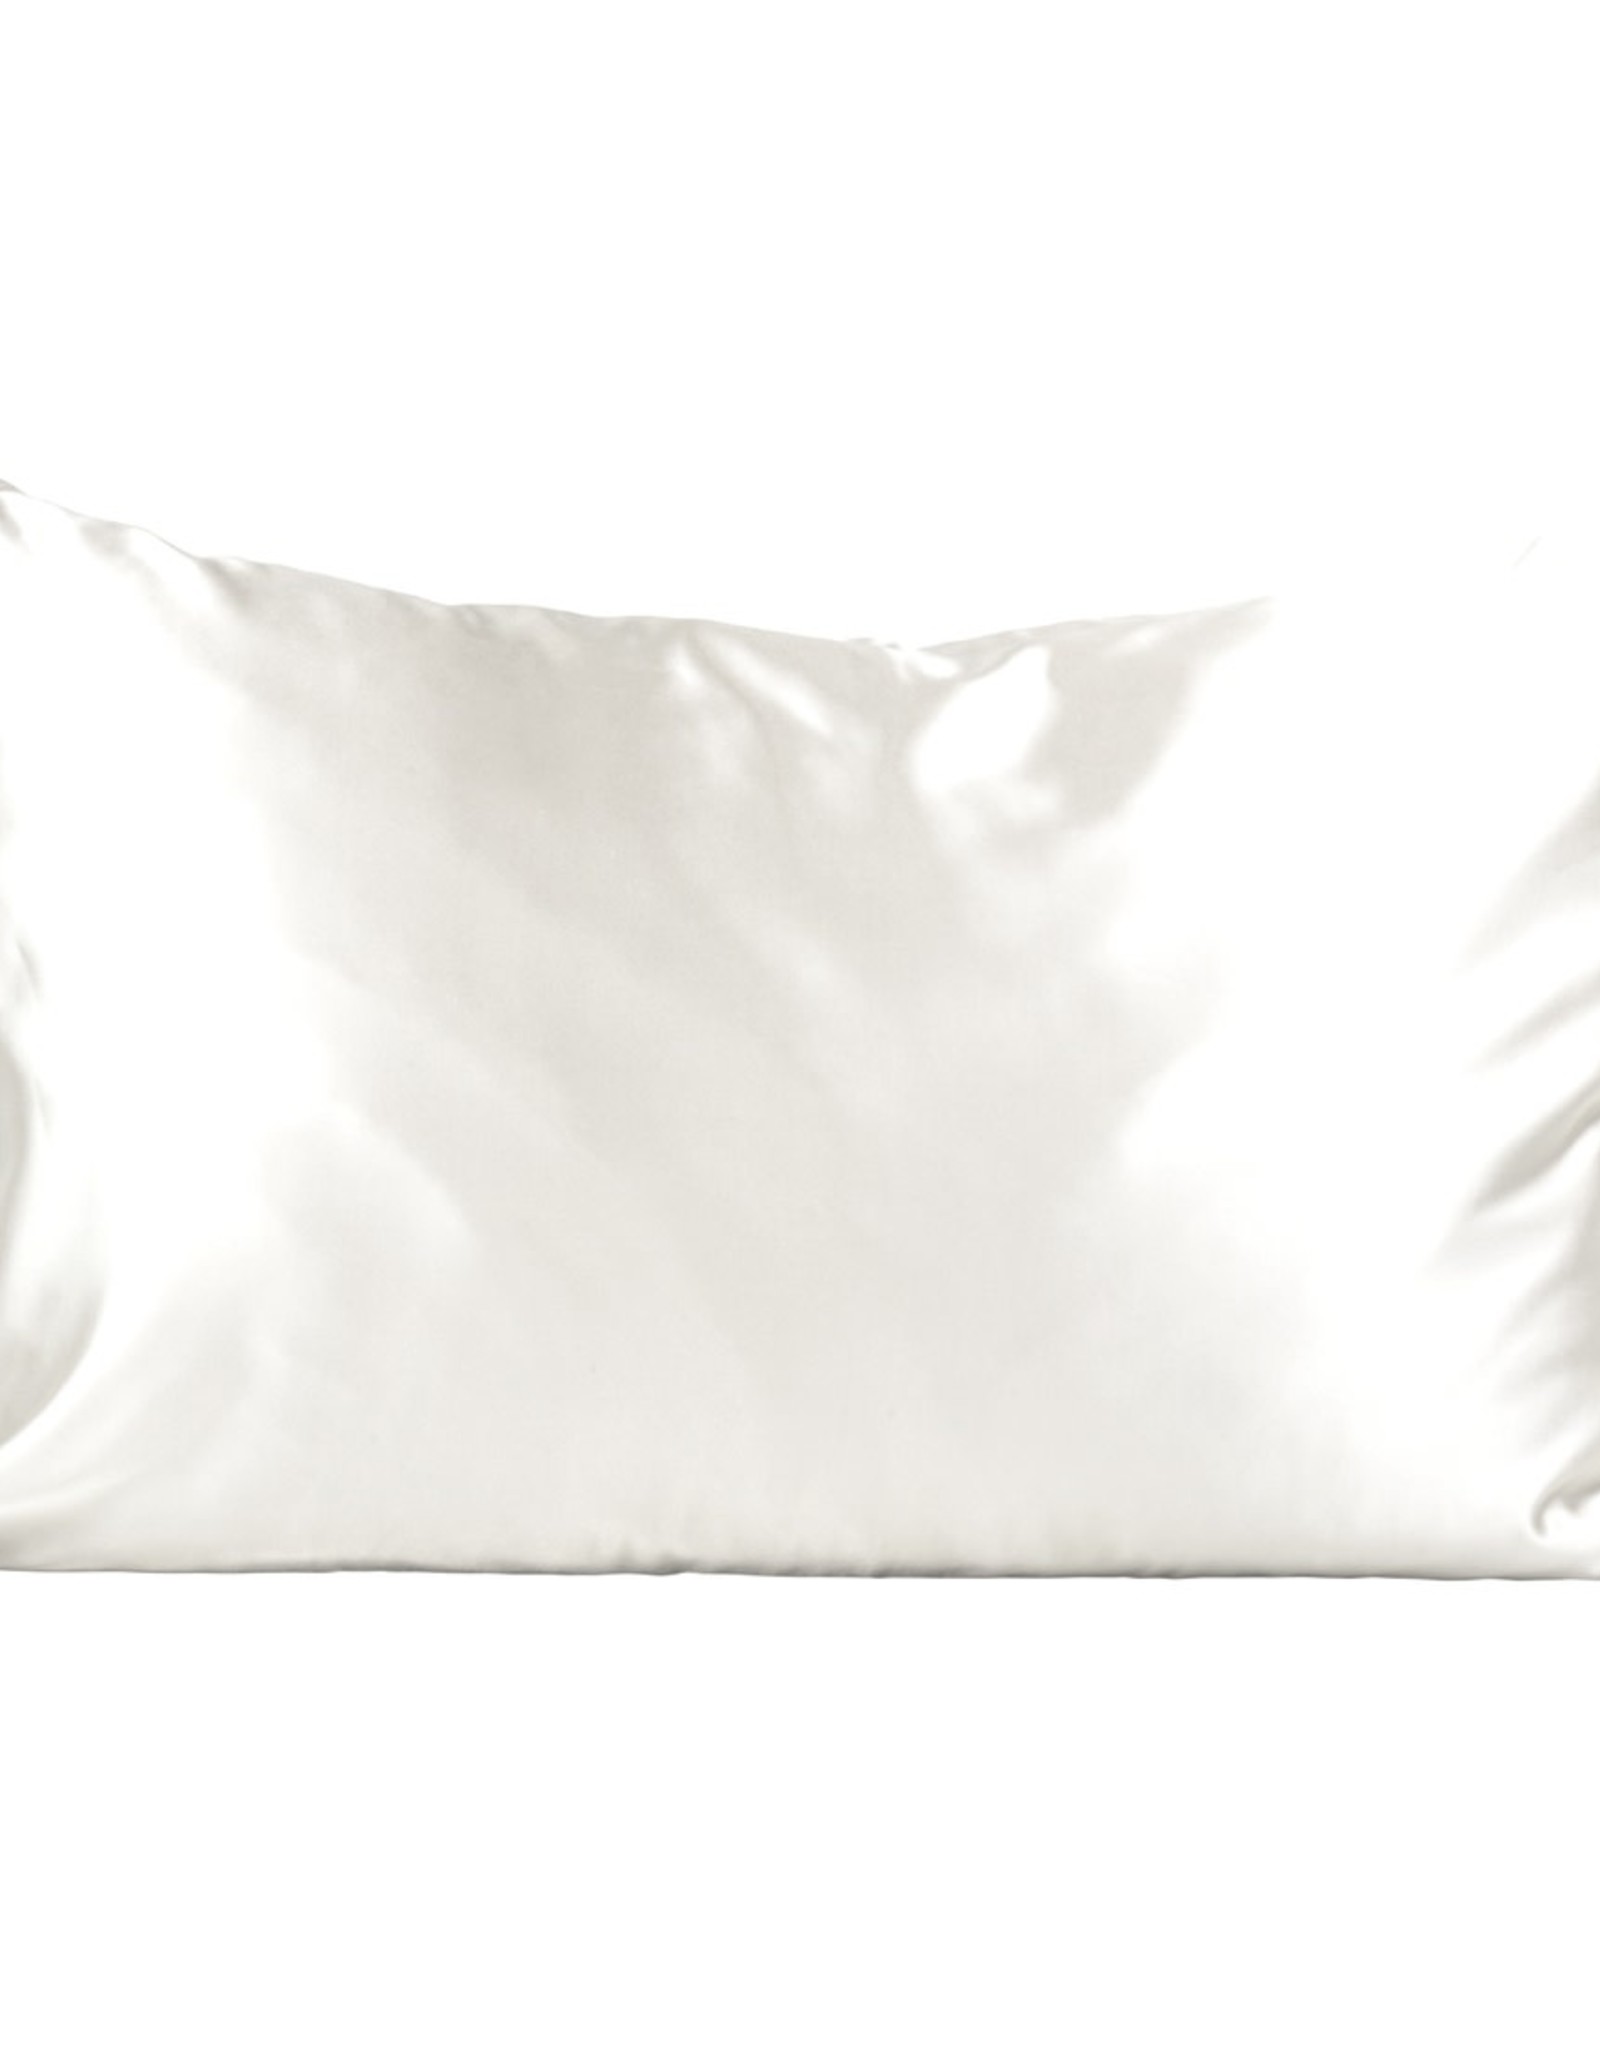 Satin Pillowcase, Ivory - Standard